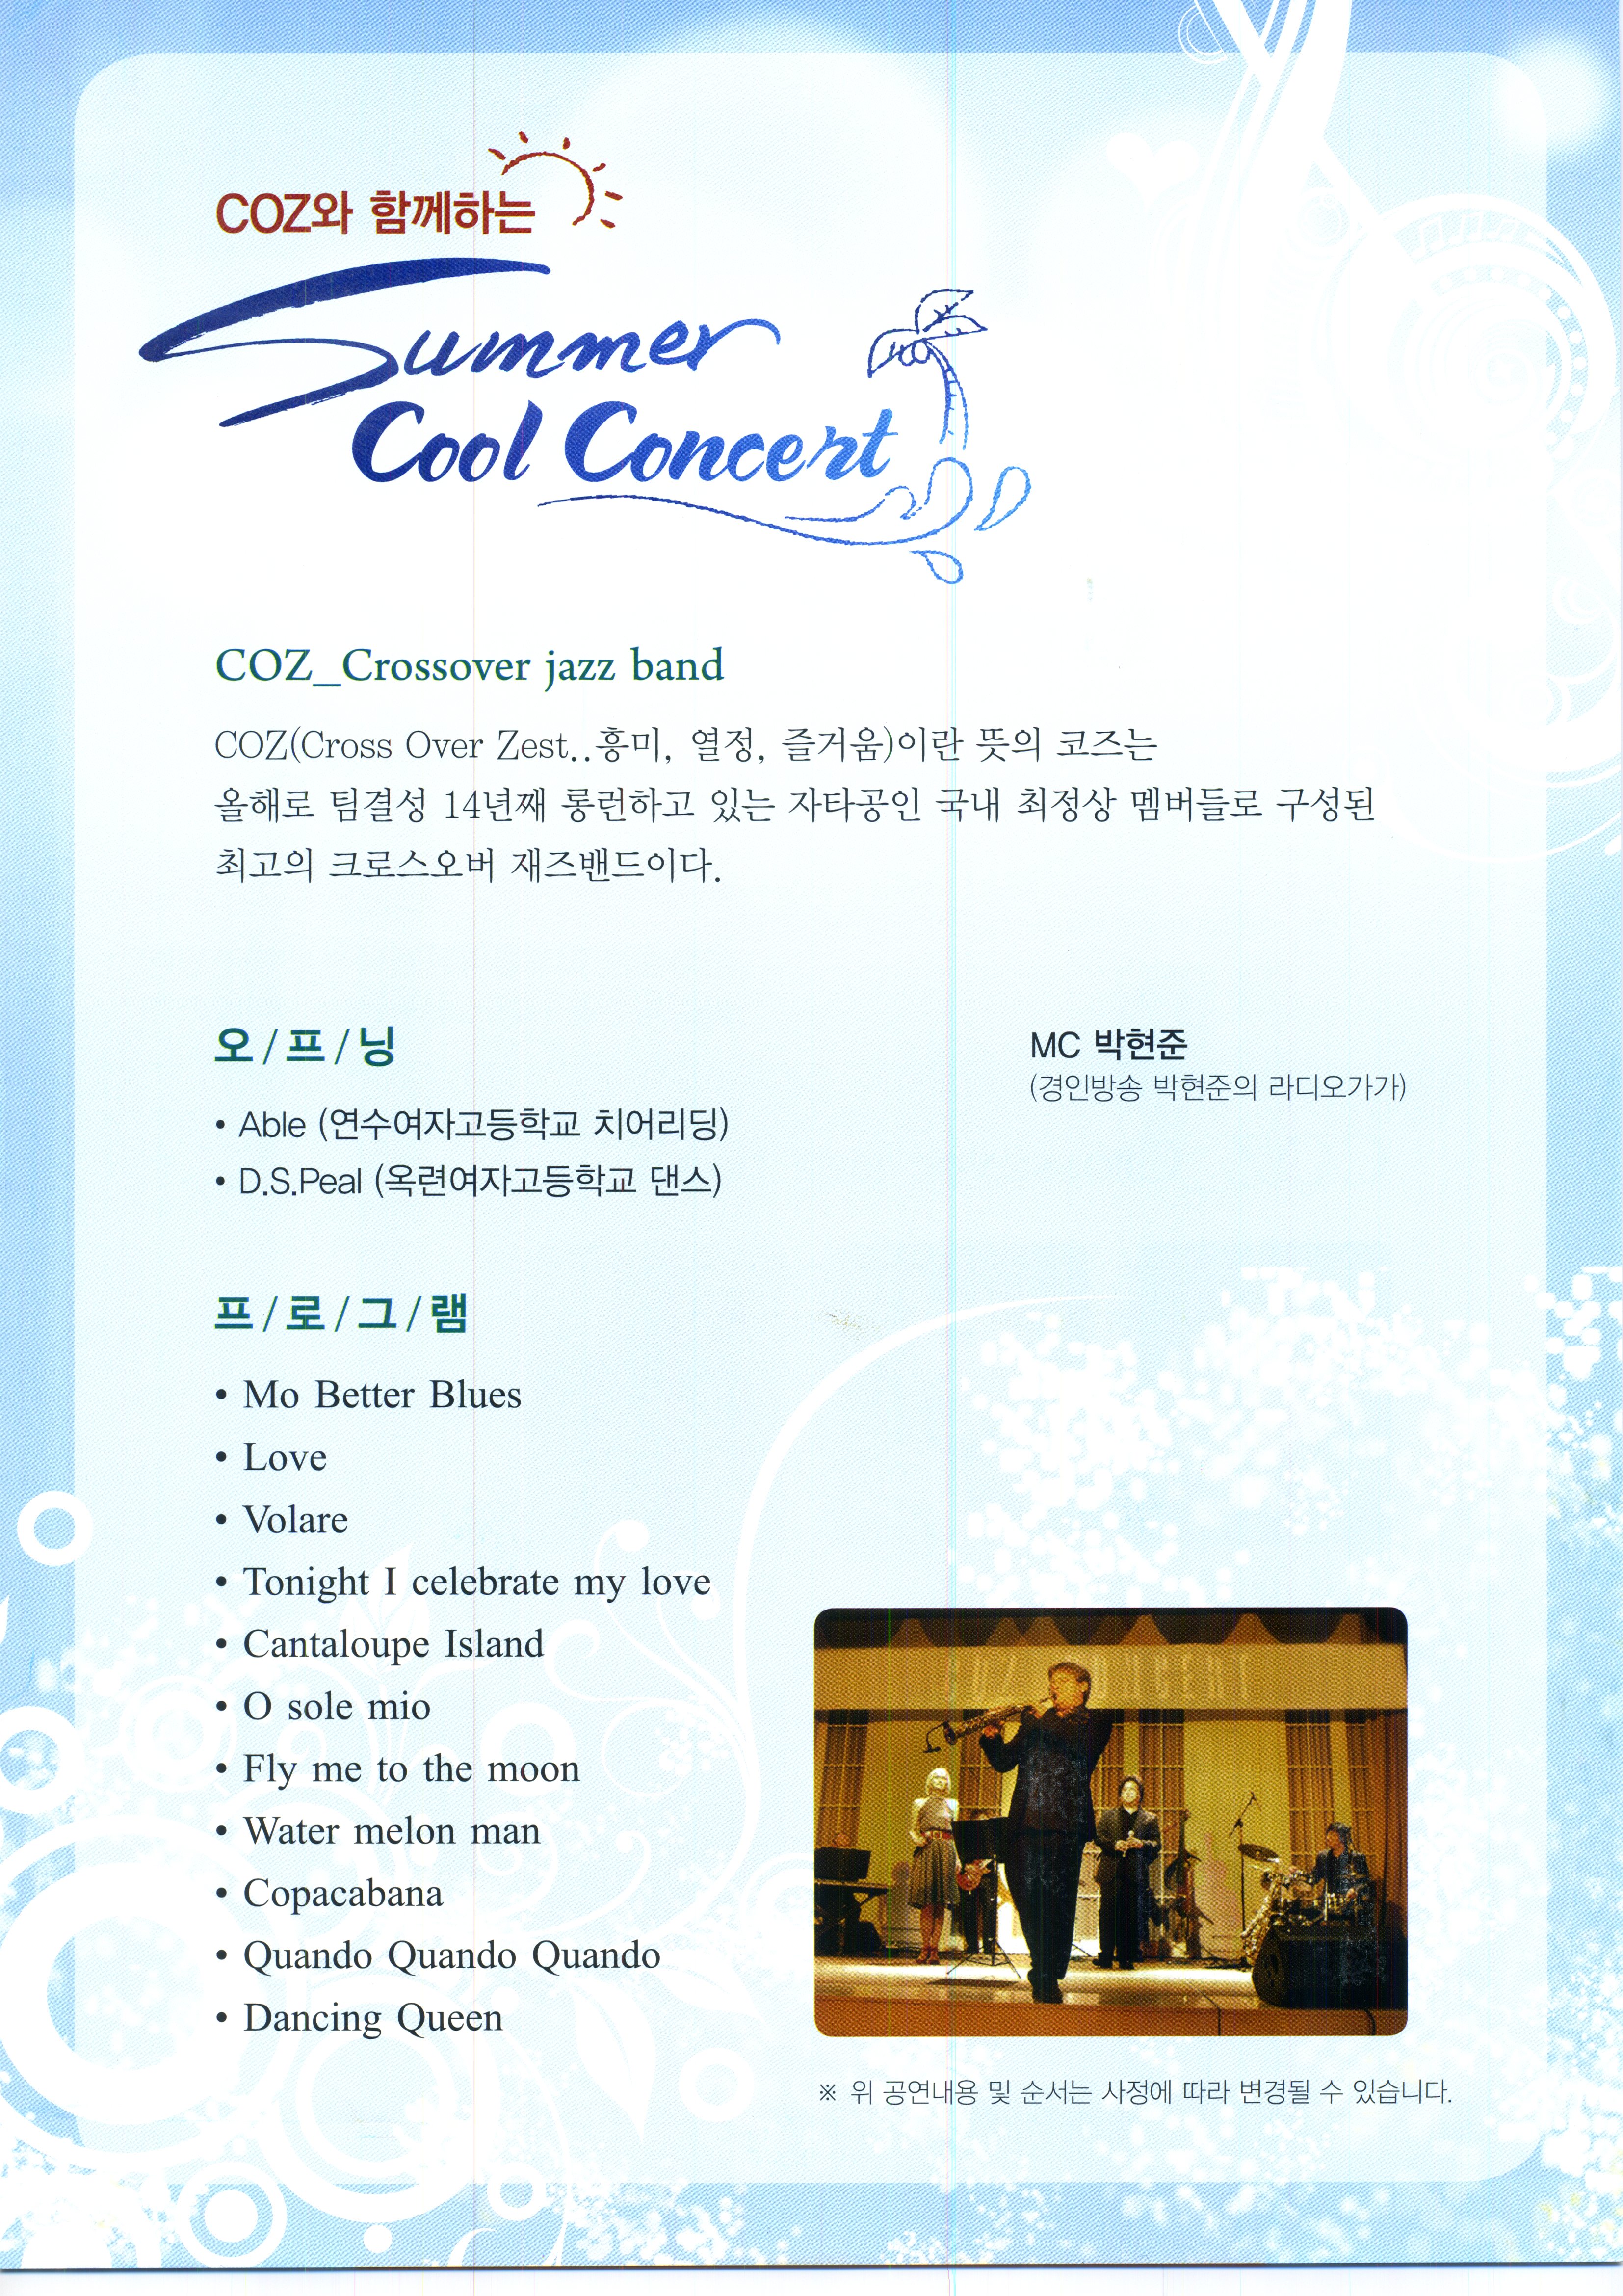 COZ와 함께하는 Summer Cool Concert 공연포스터. 자세한 내용은 하단의 공연소개 내용 참고